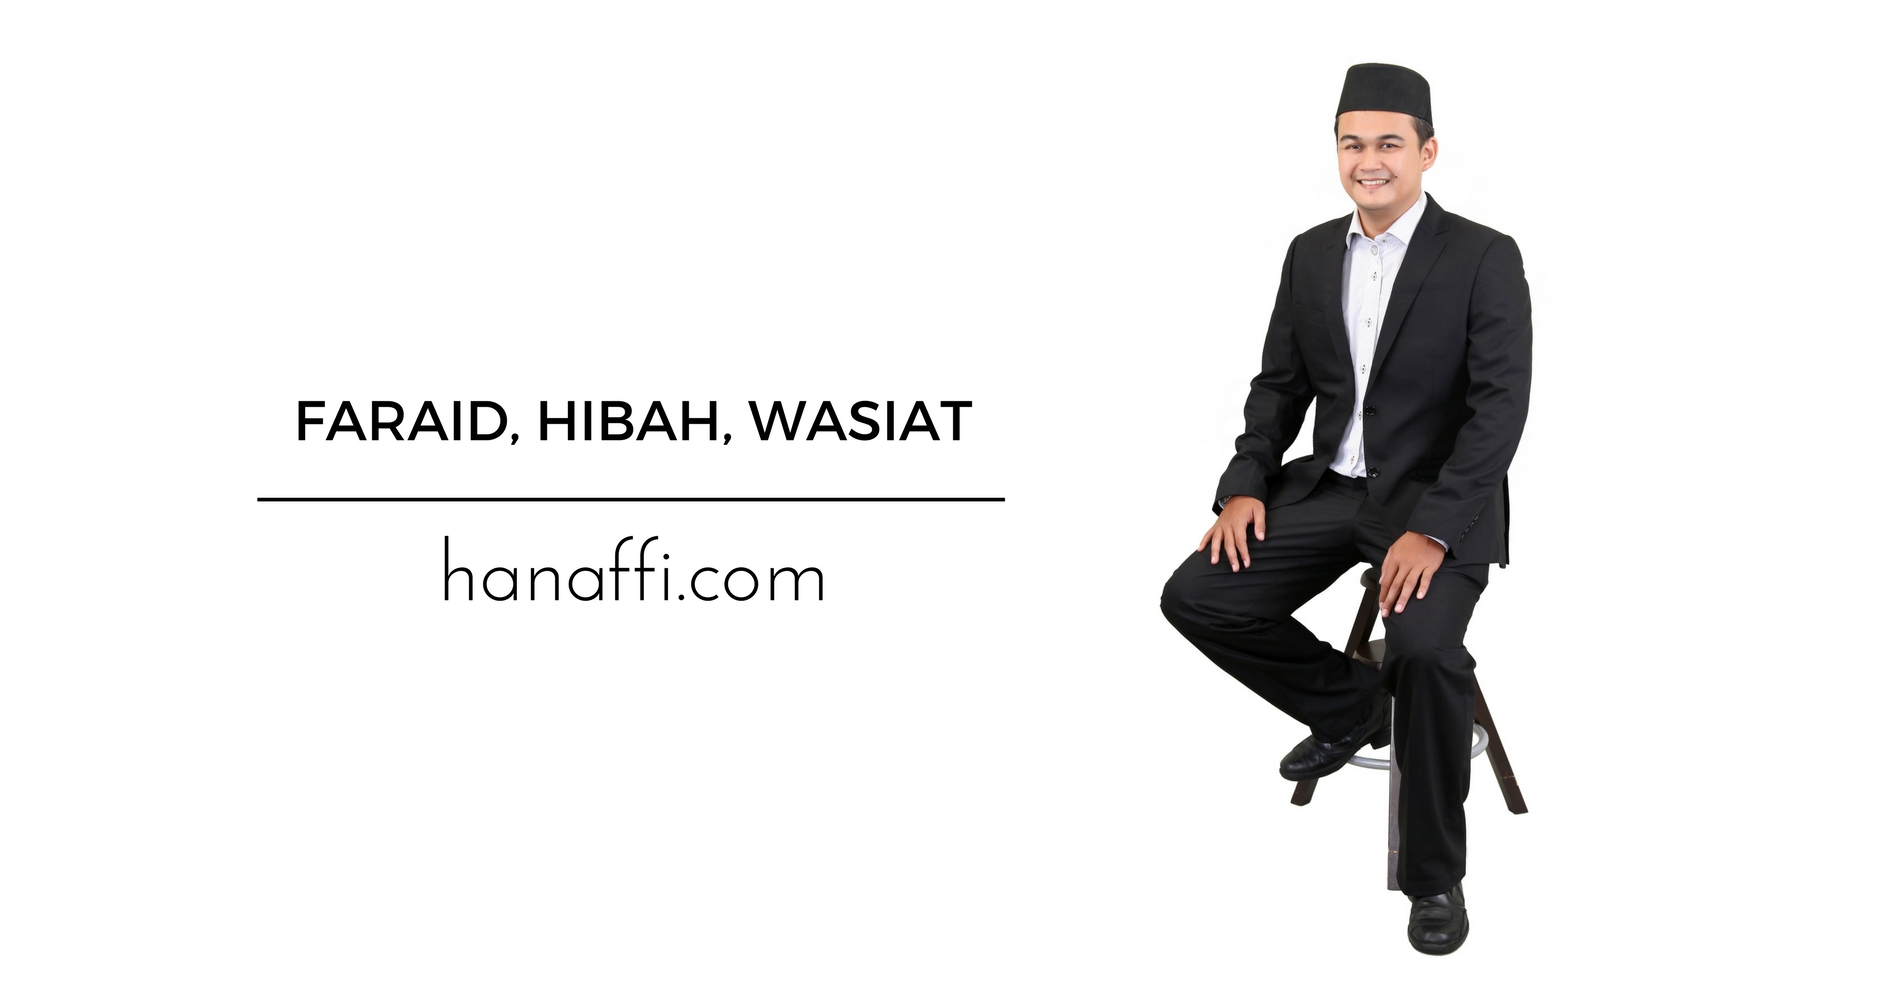 FARAID, HIBAH, WASIAT (2) - hanaffi.com